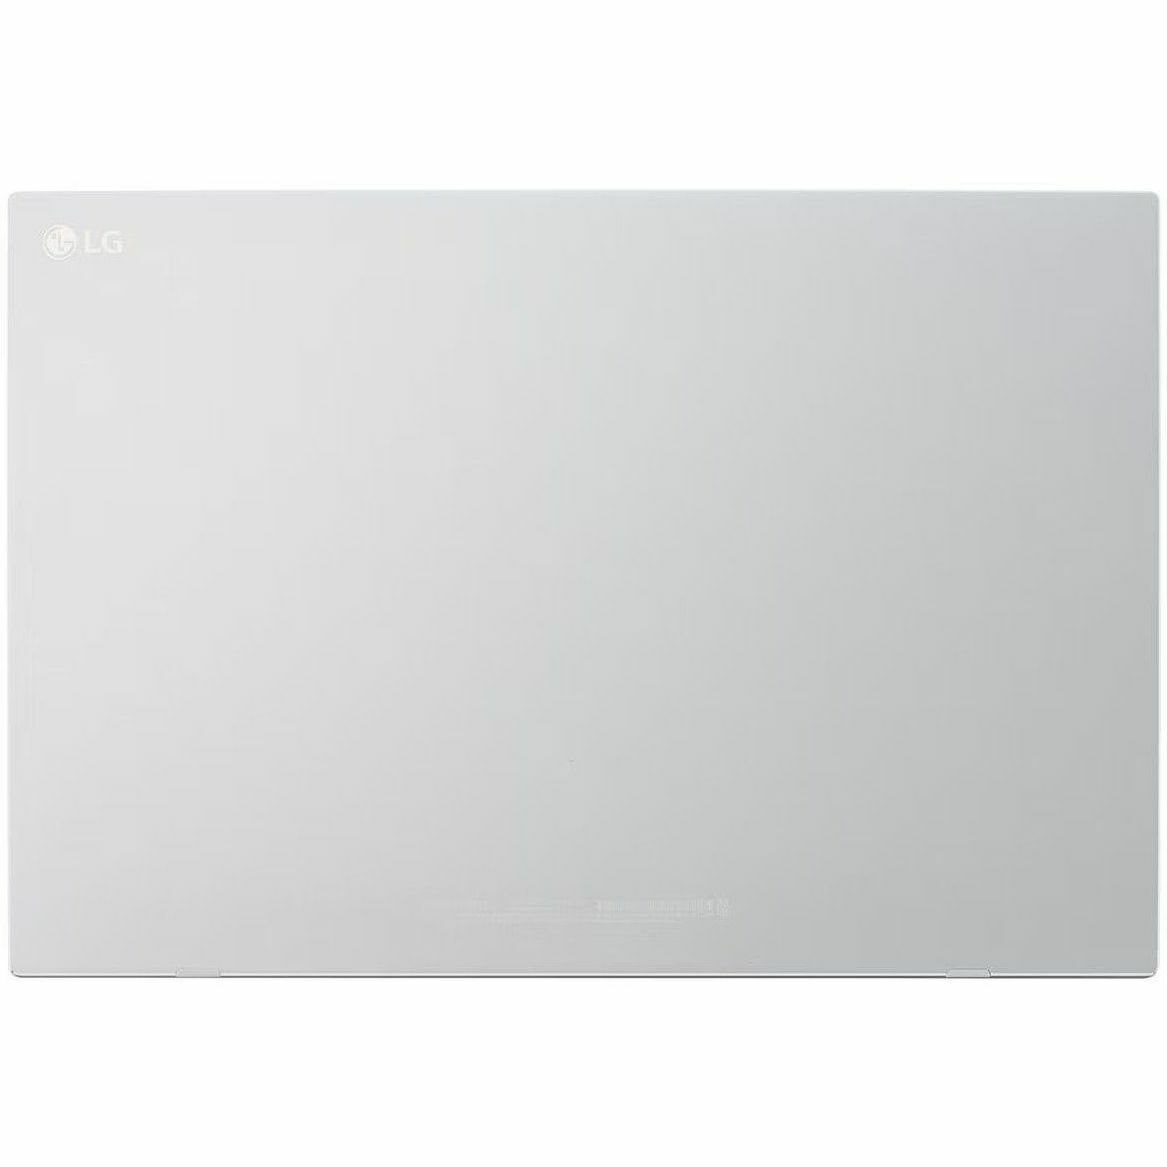 LG gram +view 16MR70 16" Class WQXGA LCD Monitor - 16:10 - Silver, Black